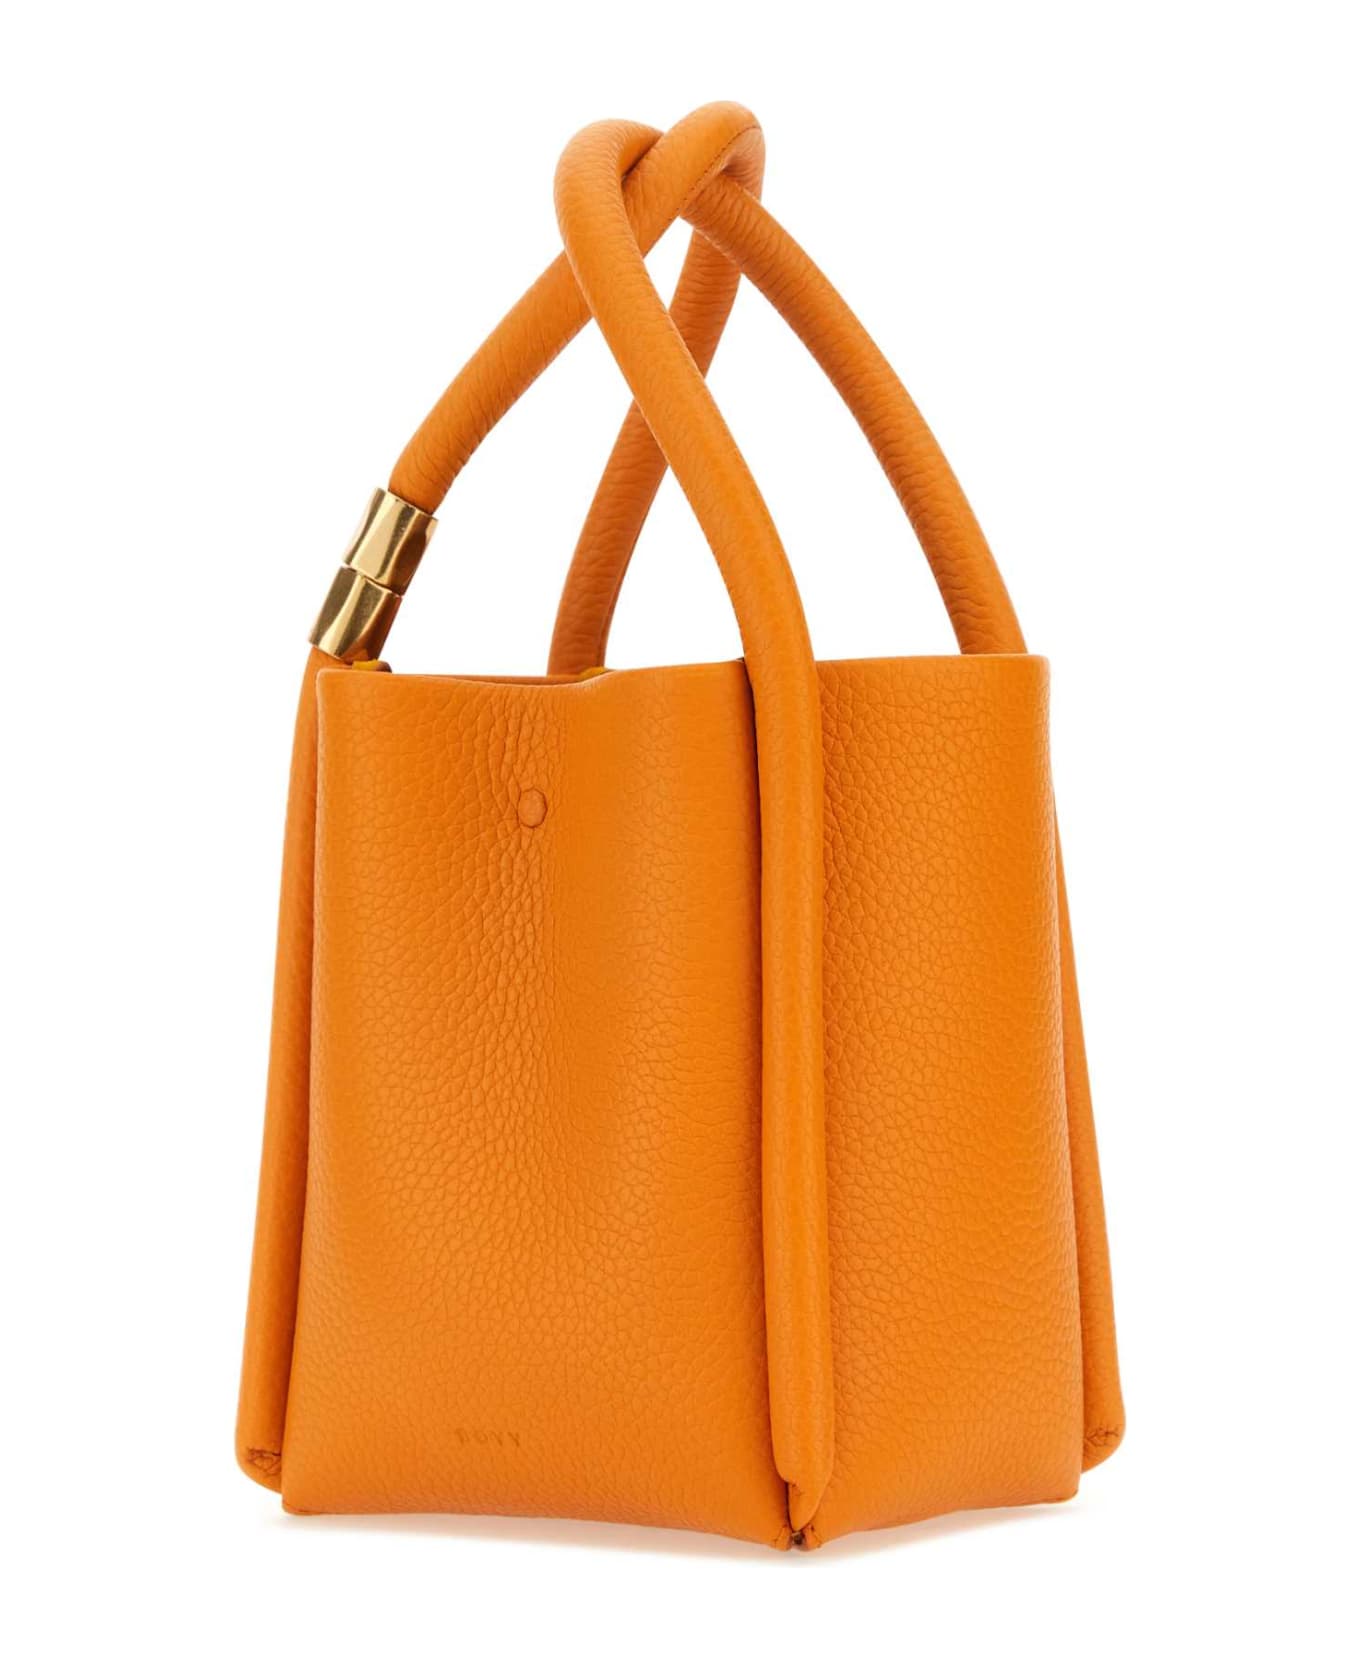 BOYY Orange Leather Lotus 12 Handbag - APRICOT